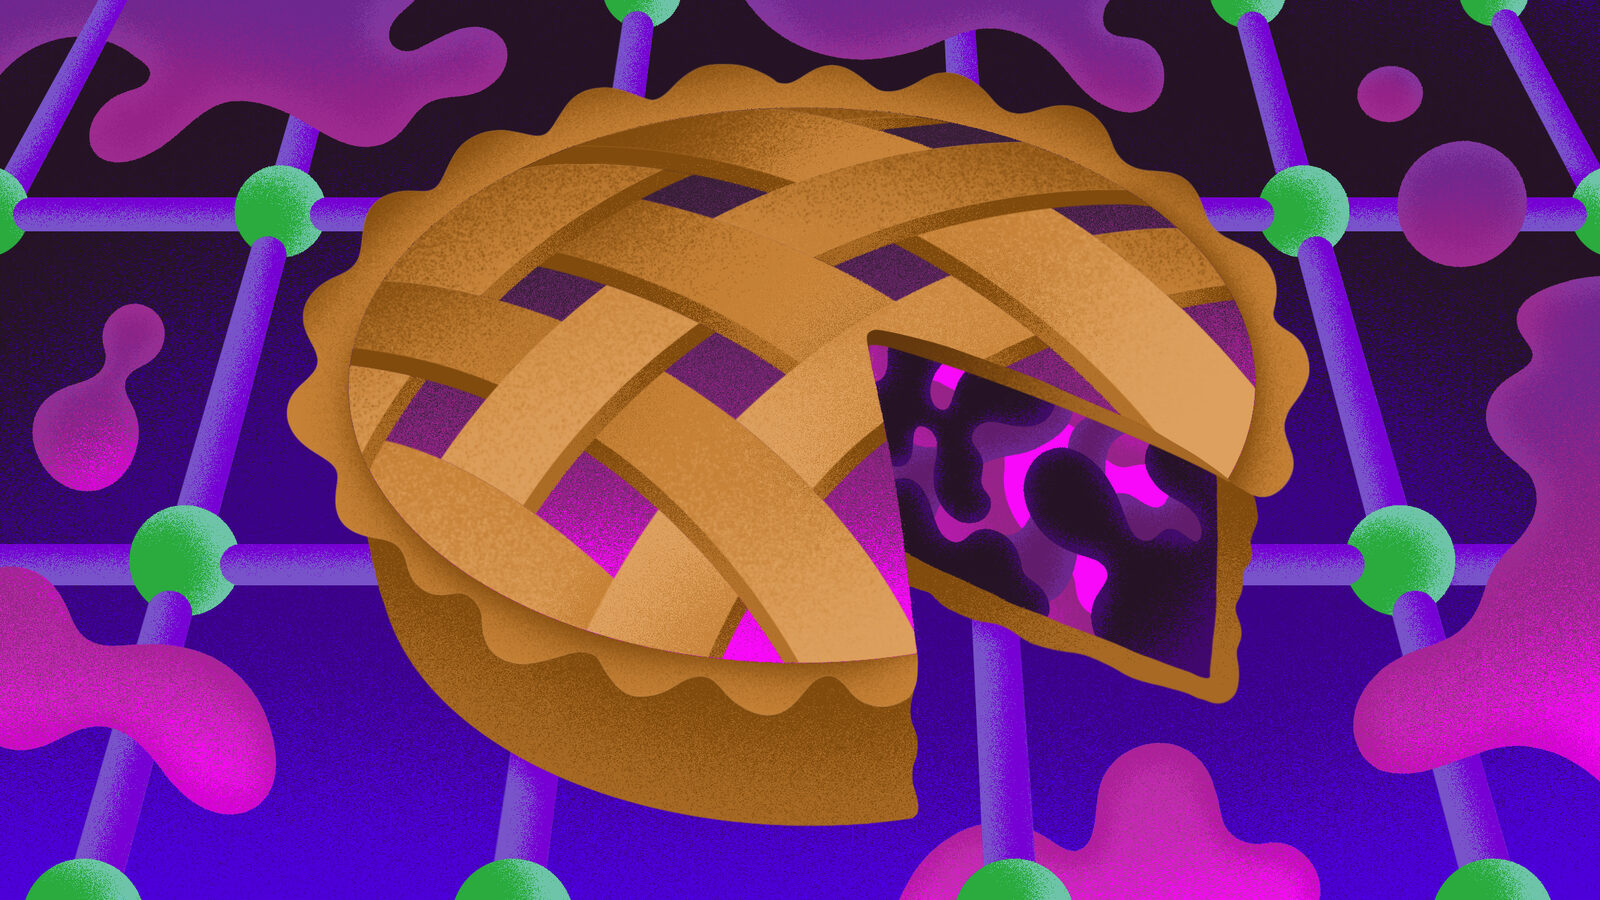 Conceptual illustration of a pie with a lattice crust